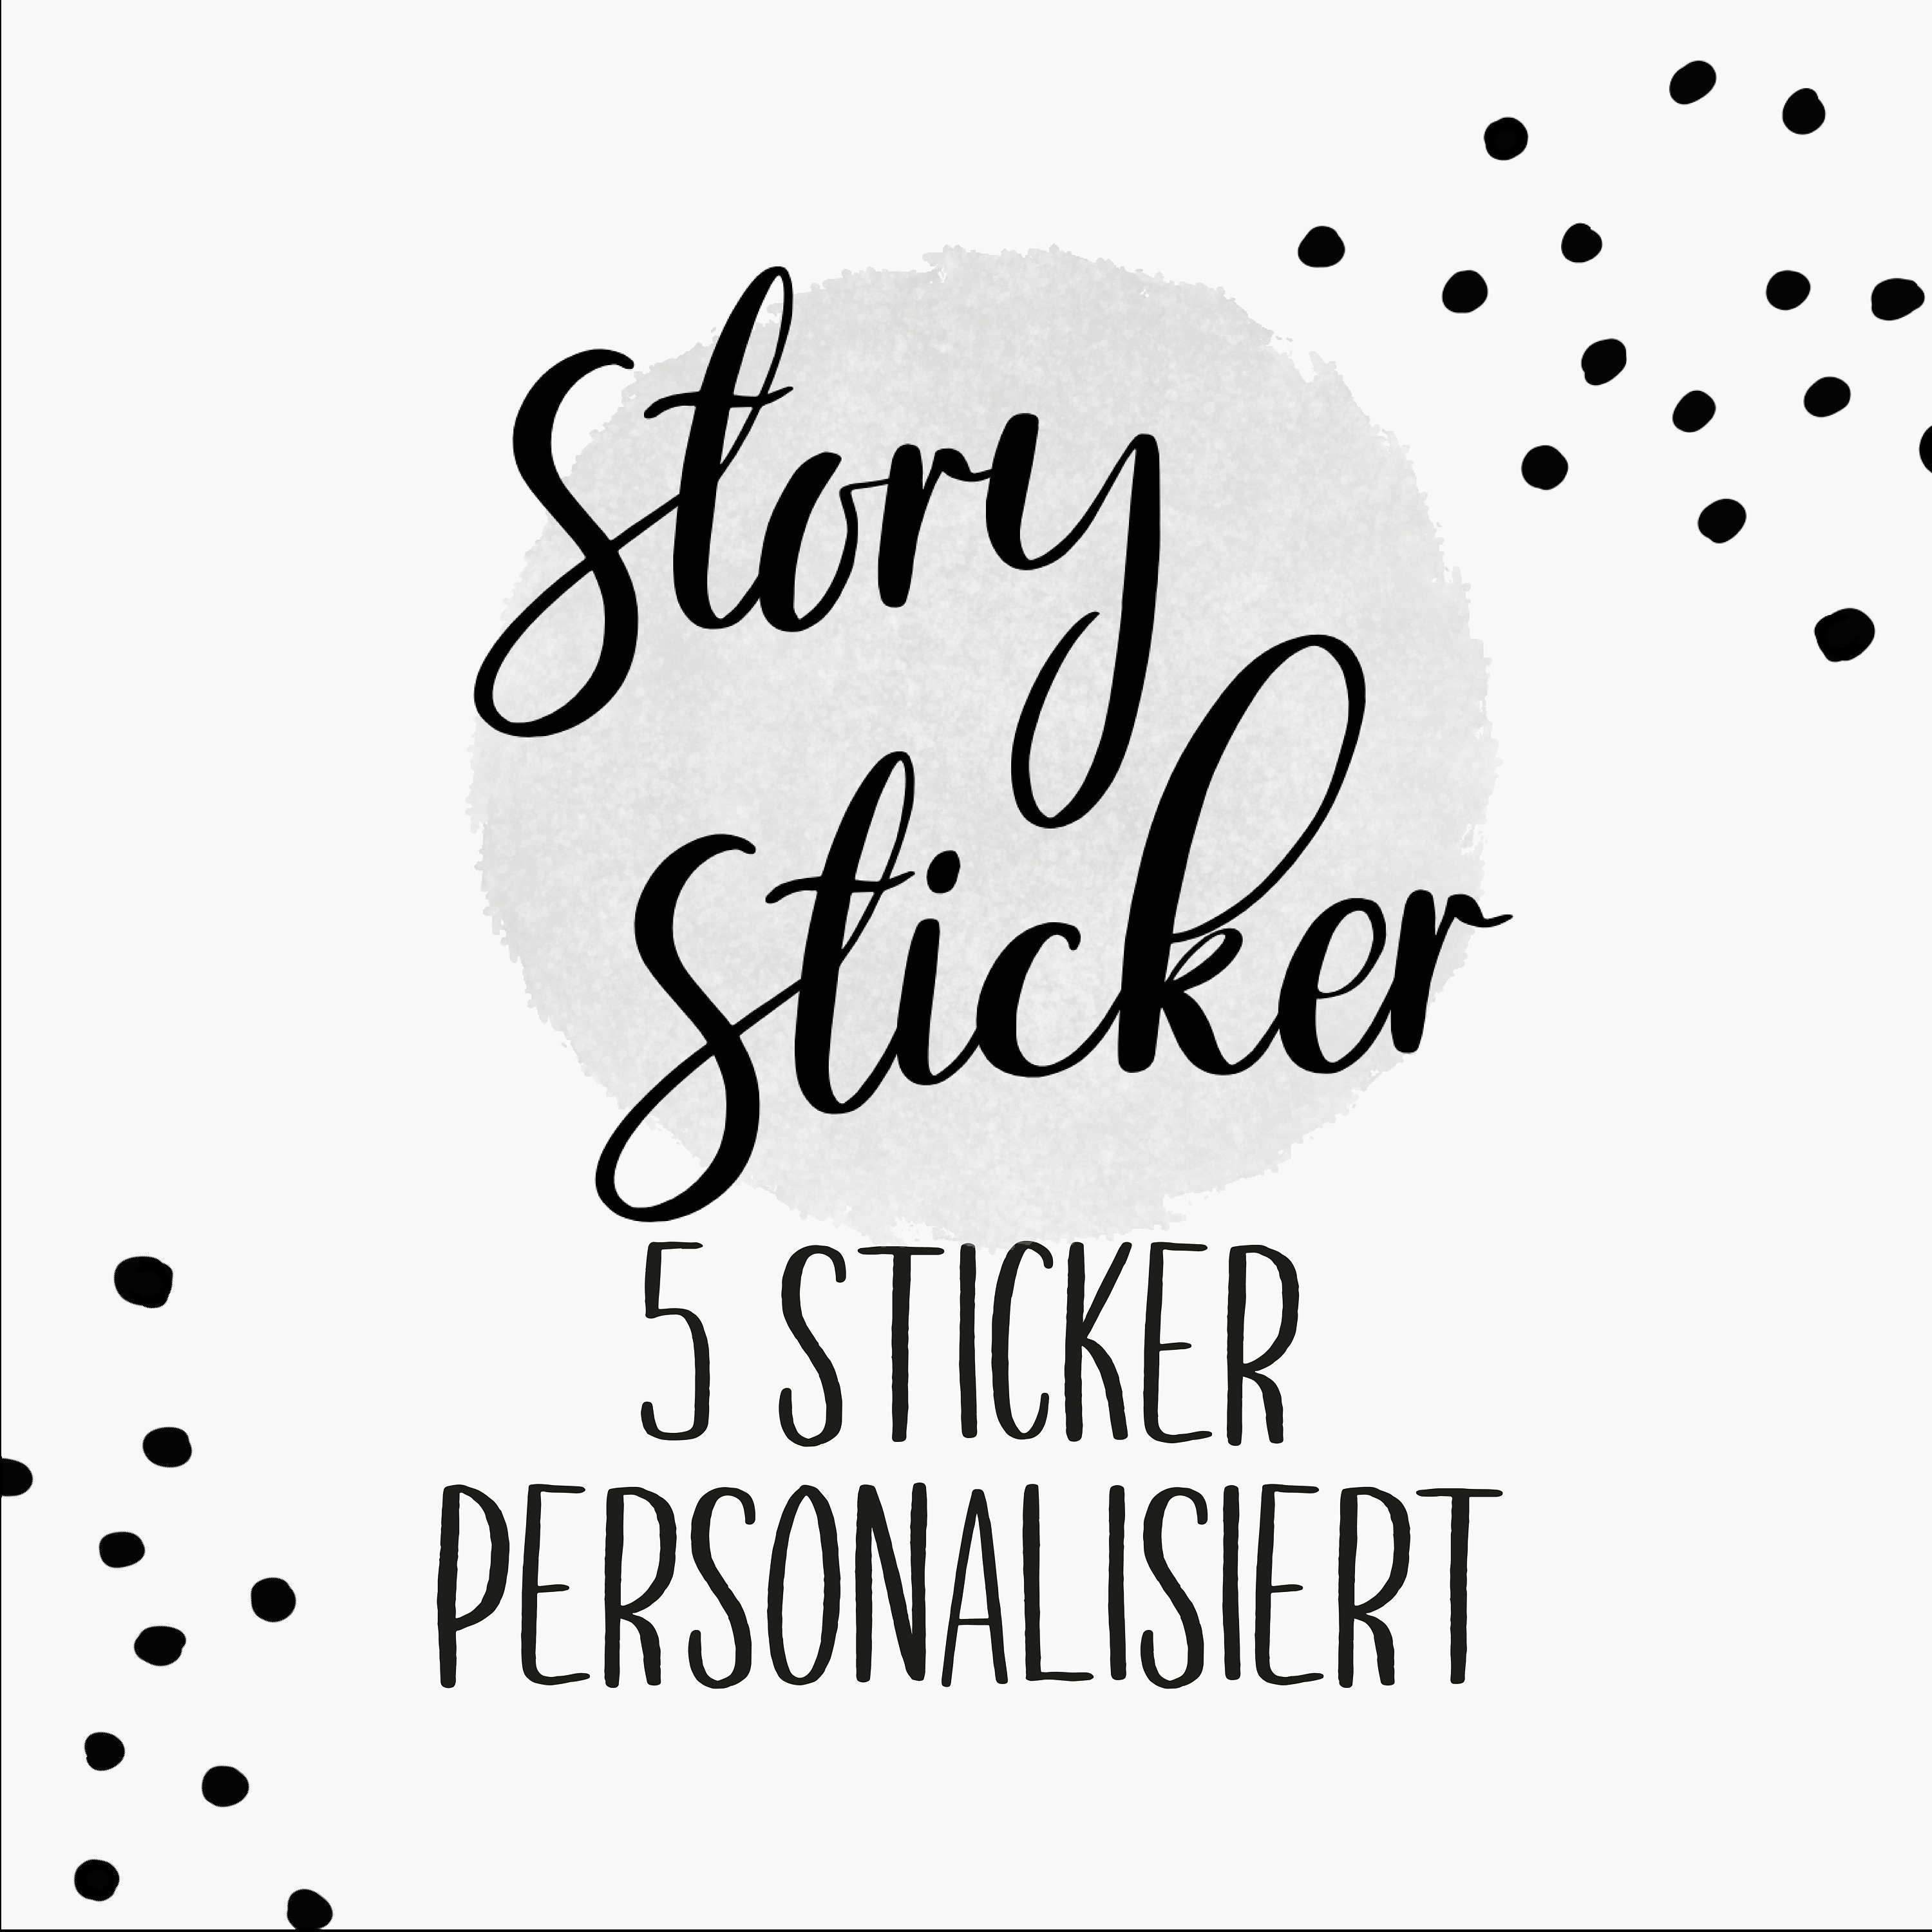 Personalisierte Story Sticker – Jezz it! GmbH